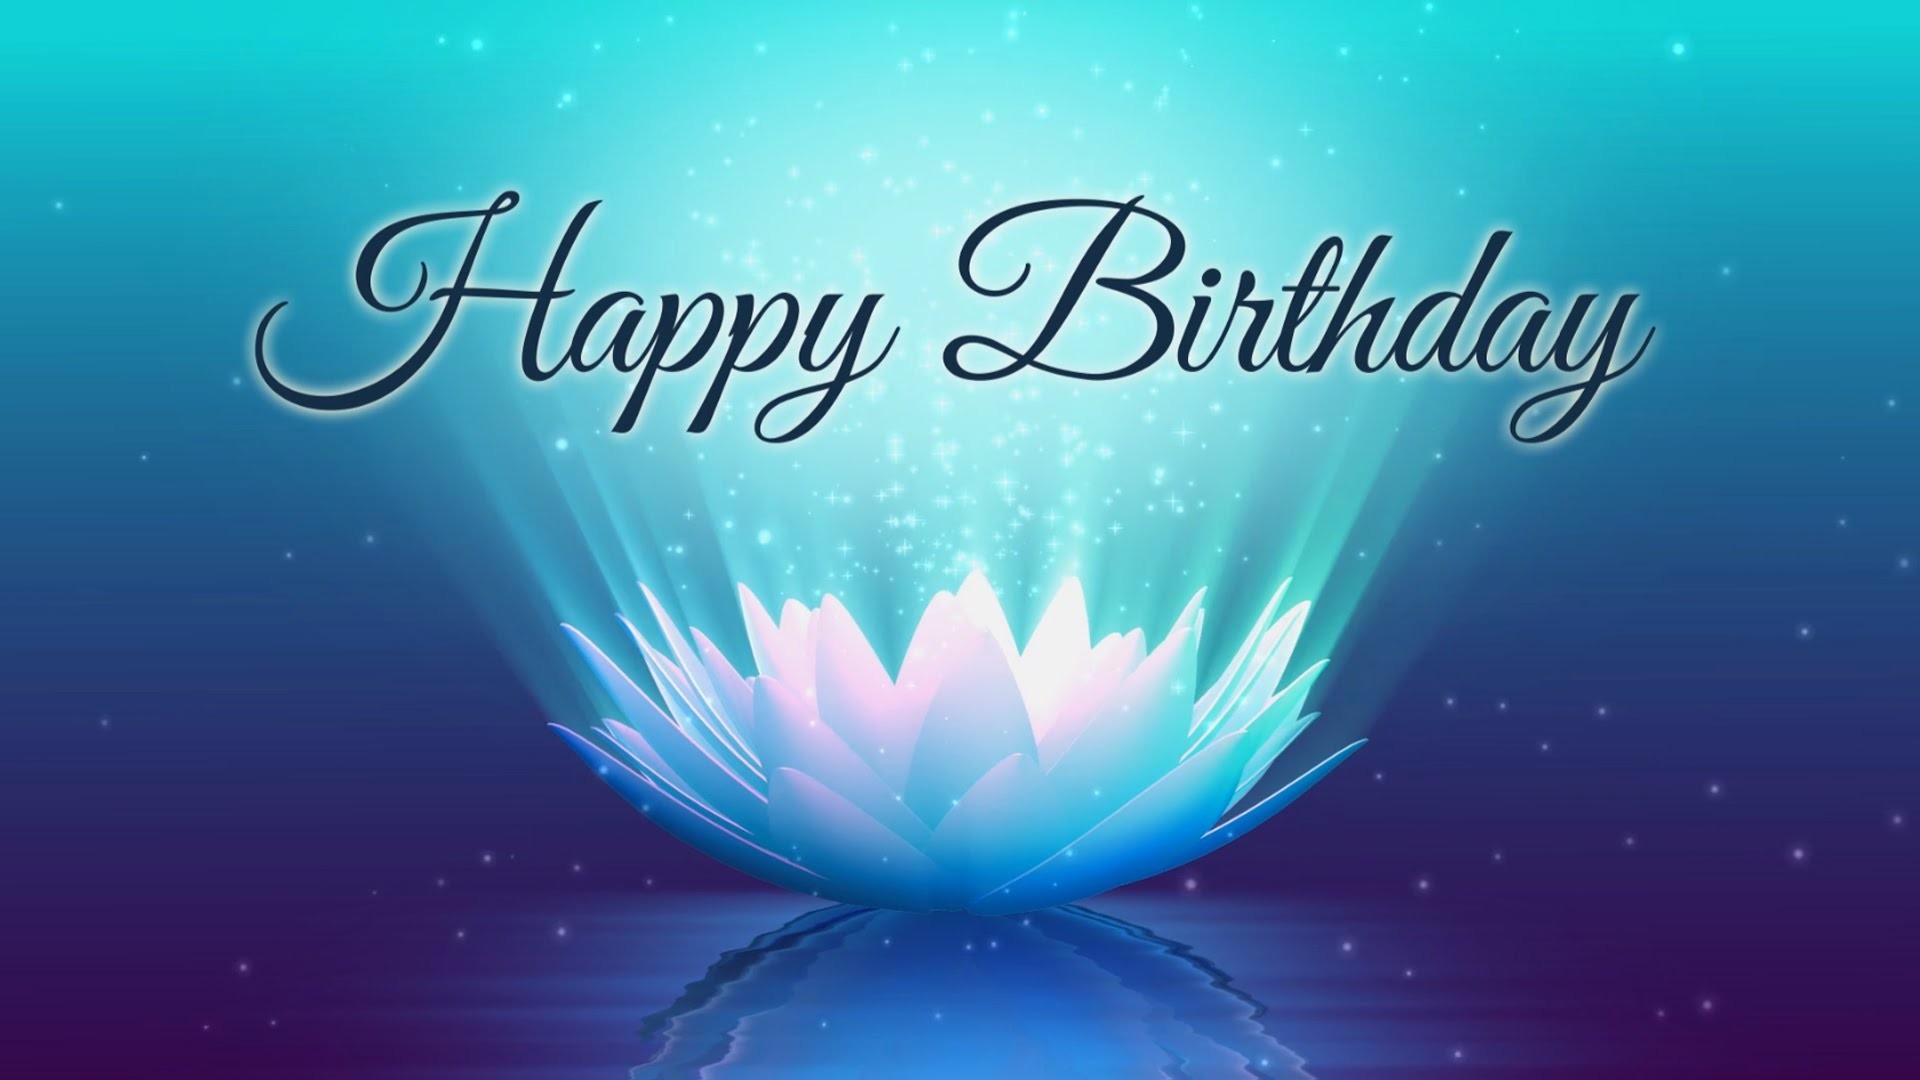 Happy Birthday - Lotus Video Animation - Motion Graphics Background - YouTu...